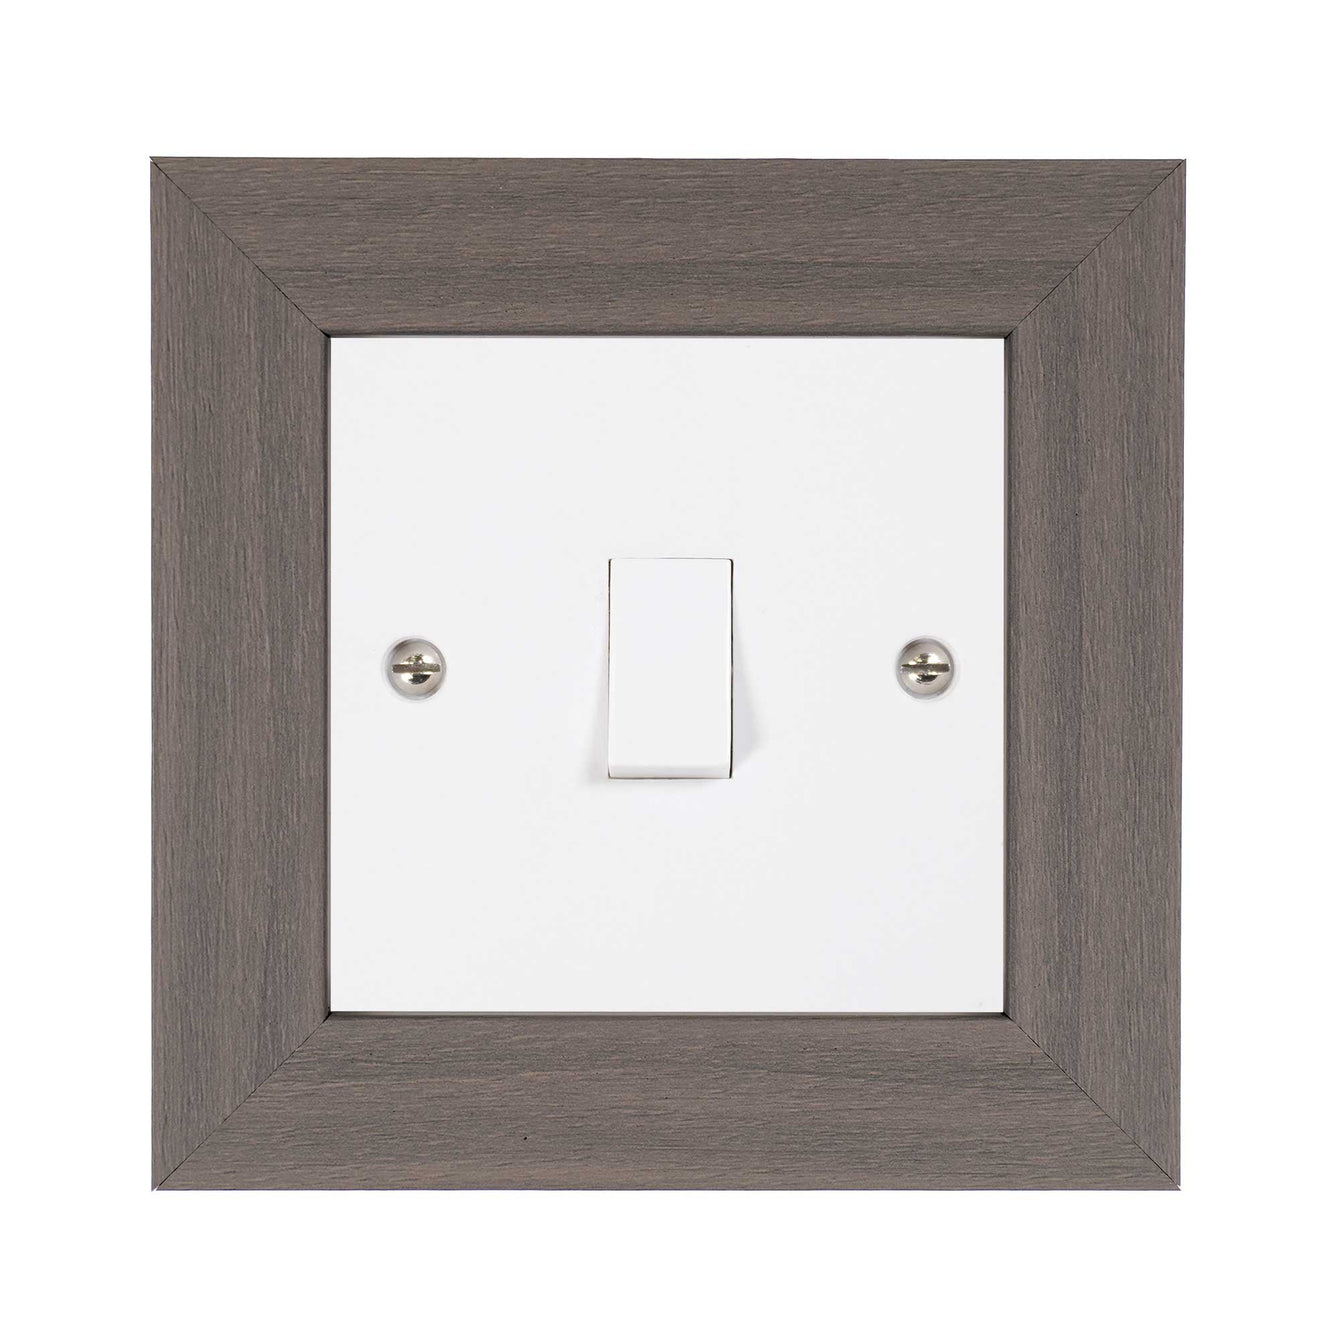 ElekTek Decorative Switch Surround Frame Cover Finger Plate Modena Dark Wood Effects Dark Walnut Gloss